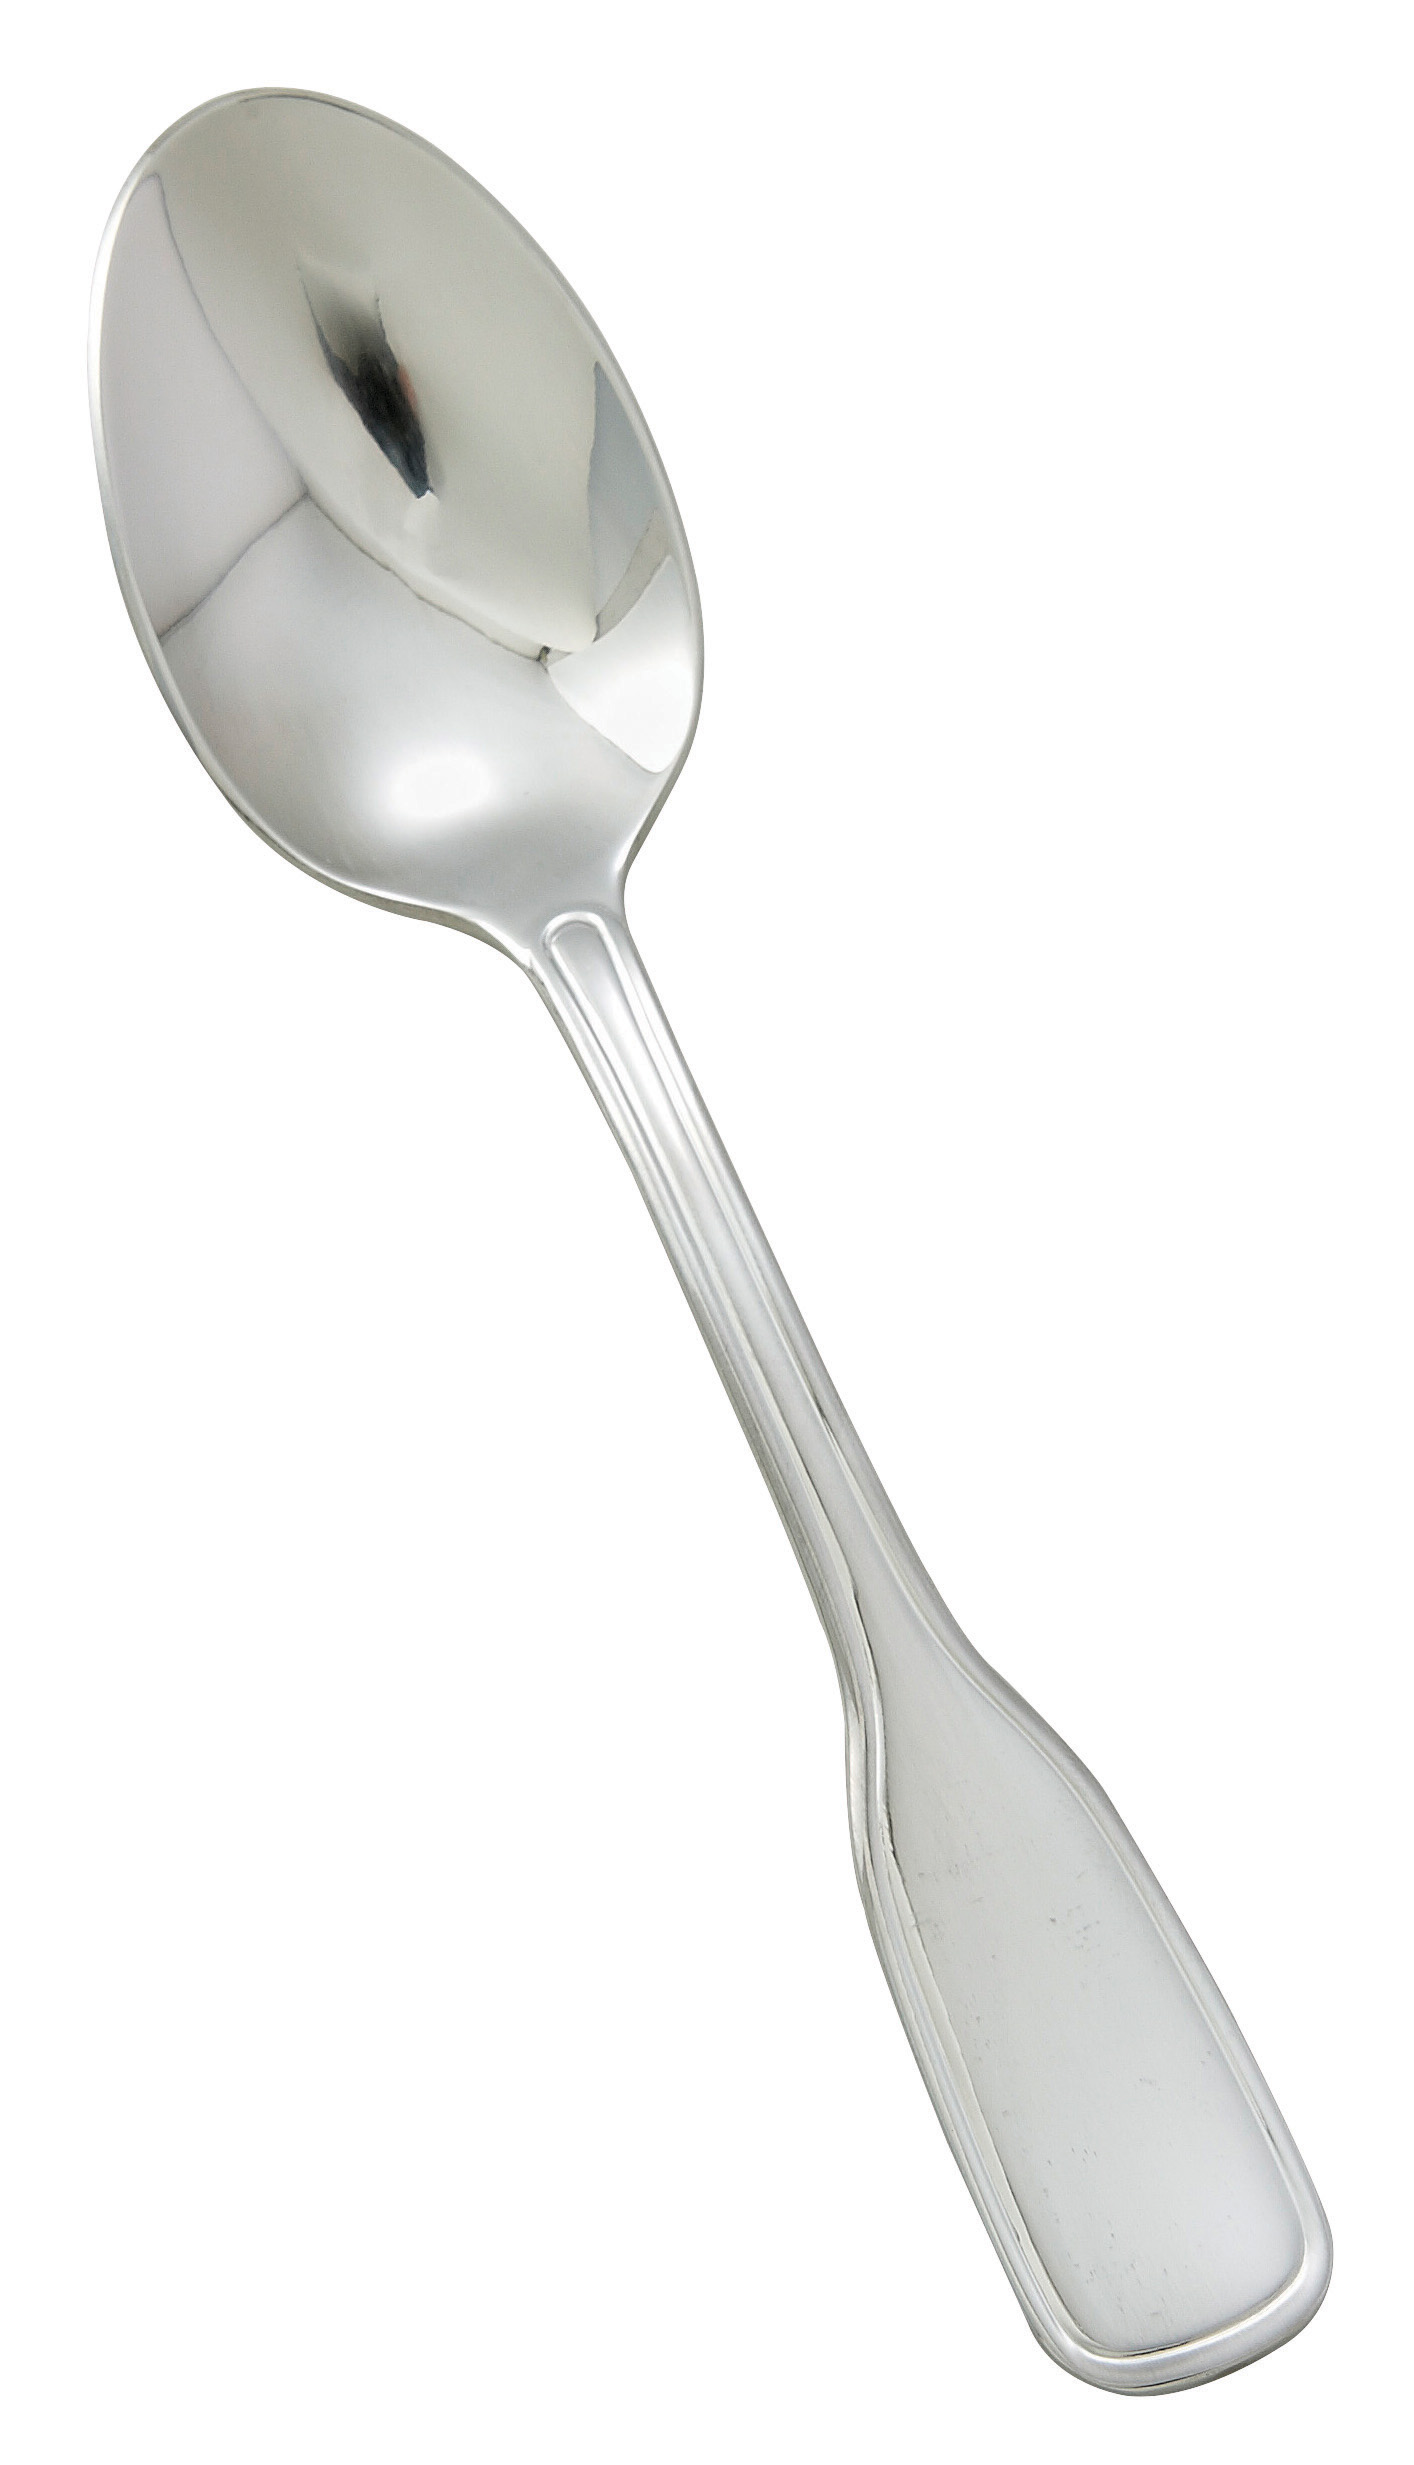 Teaspoon, 18/8 stainless steel, extra heavy weight,